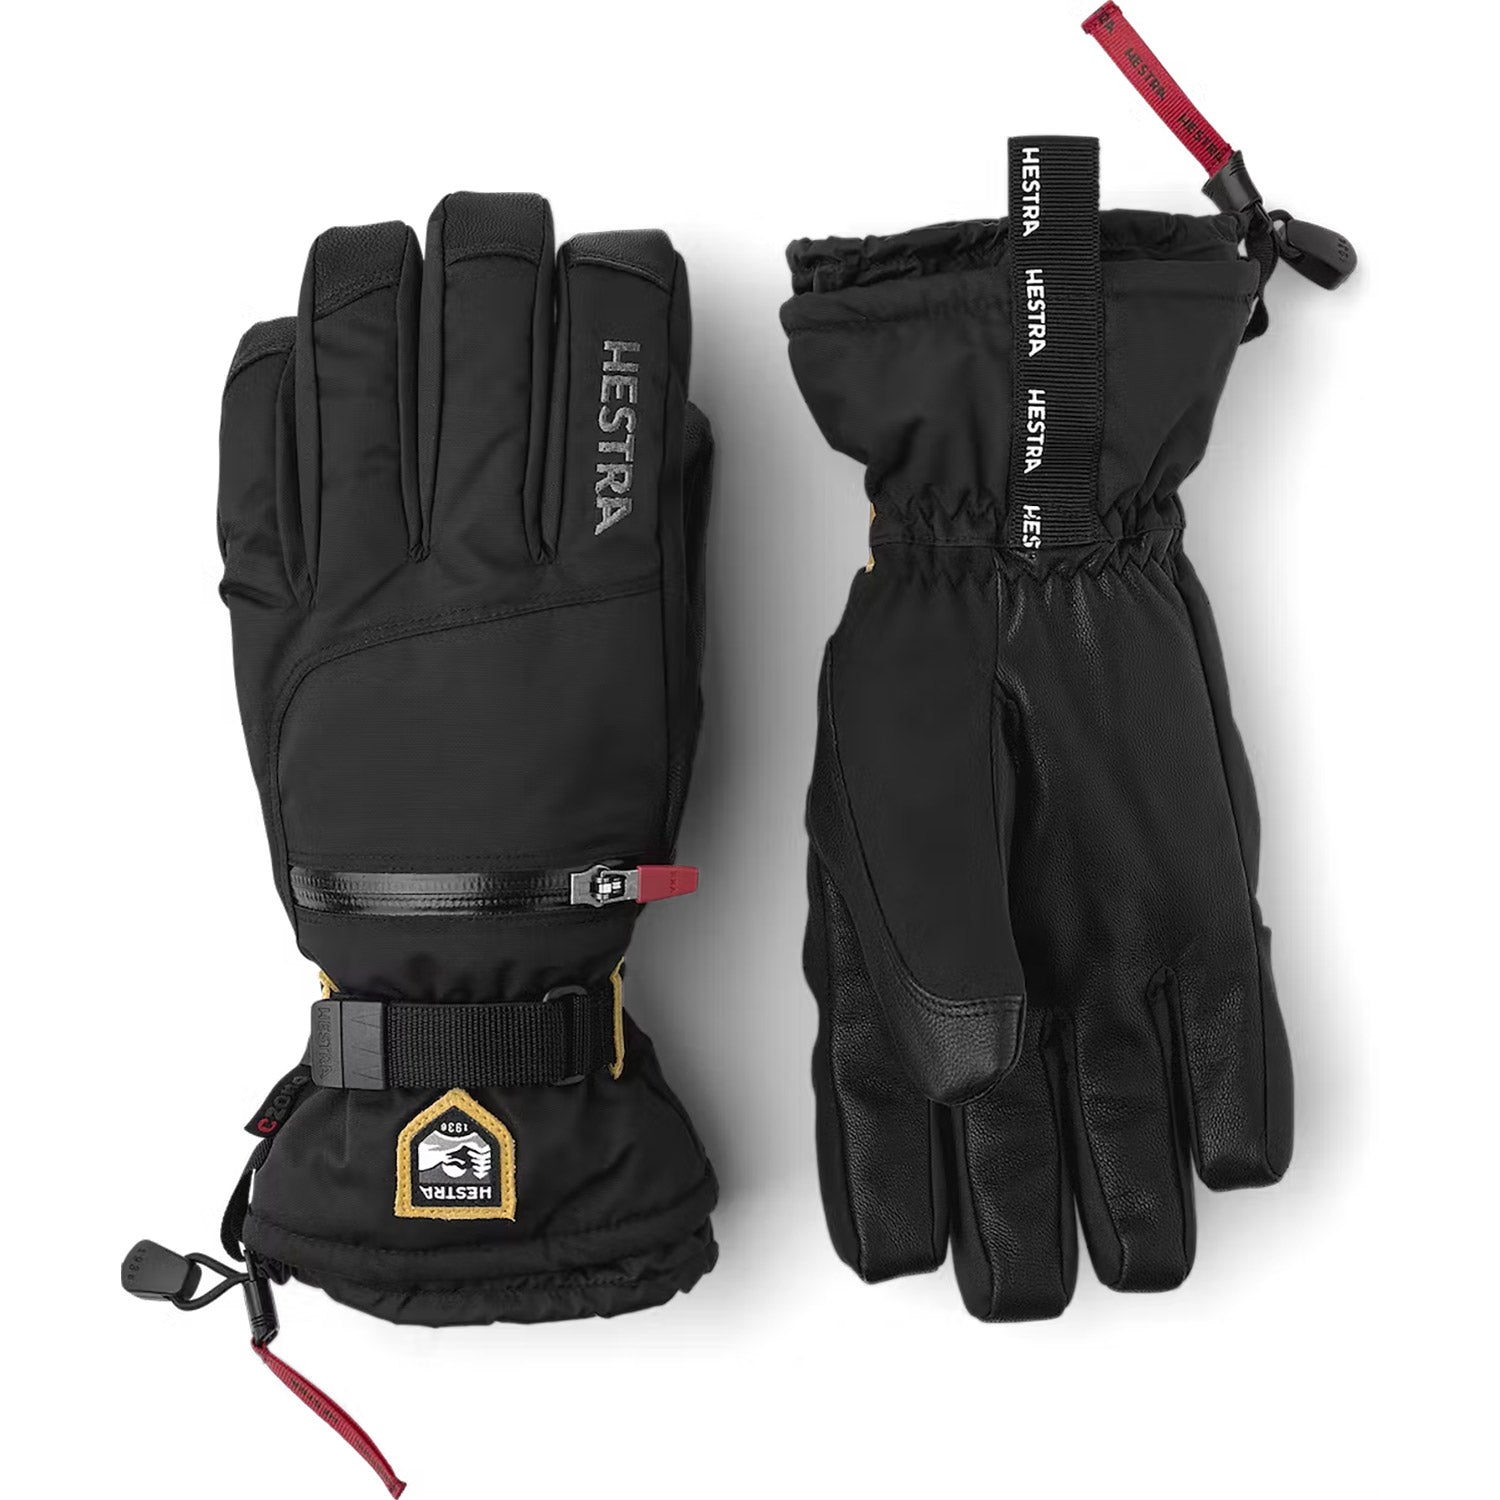 All Mountain Czone 5-finger Snow Glove